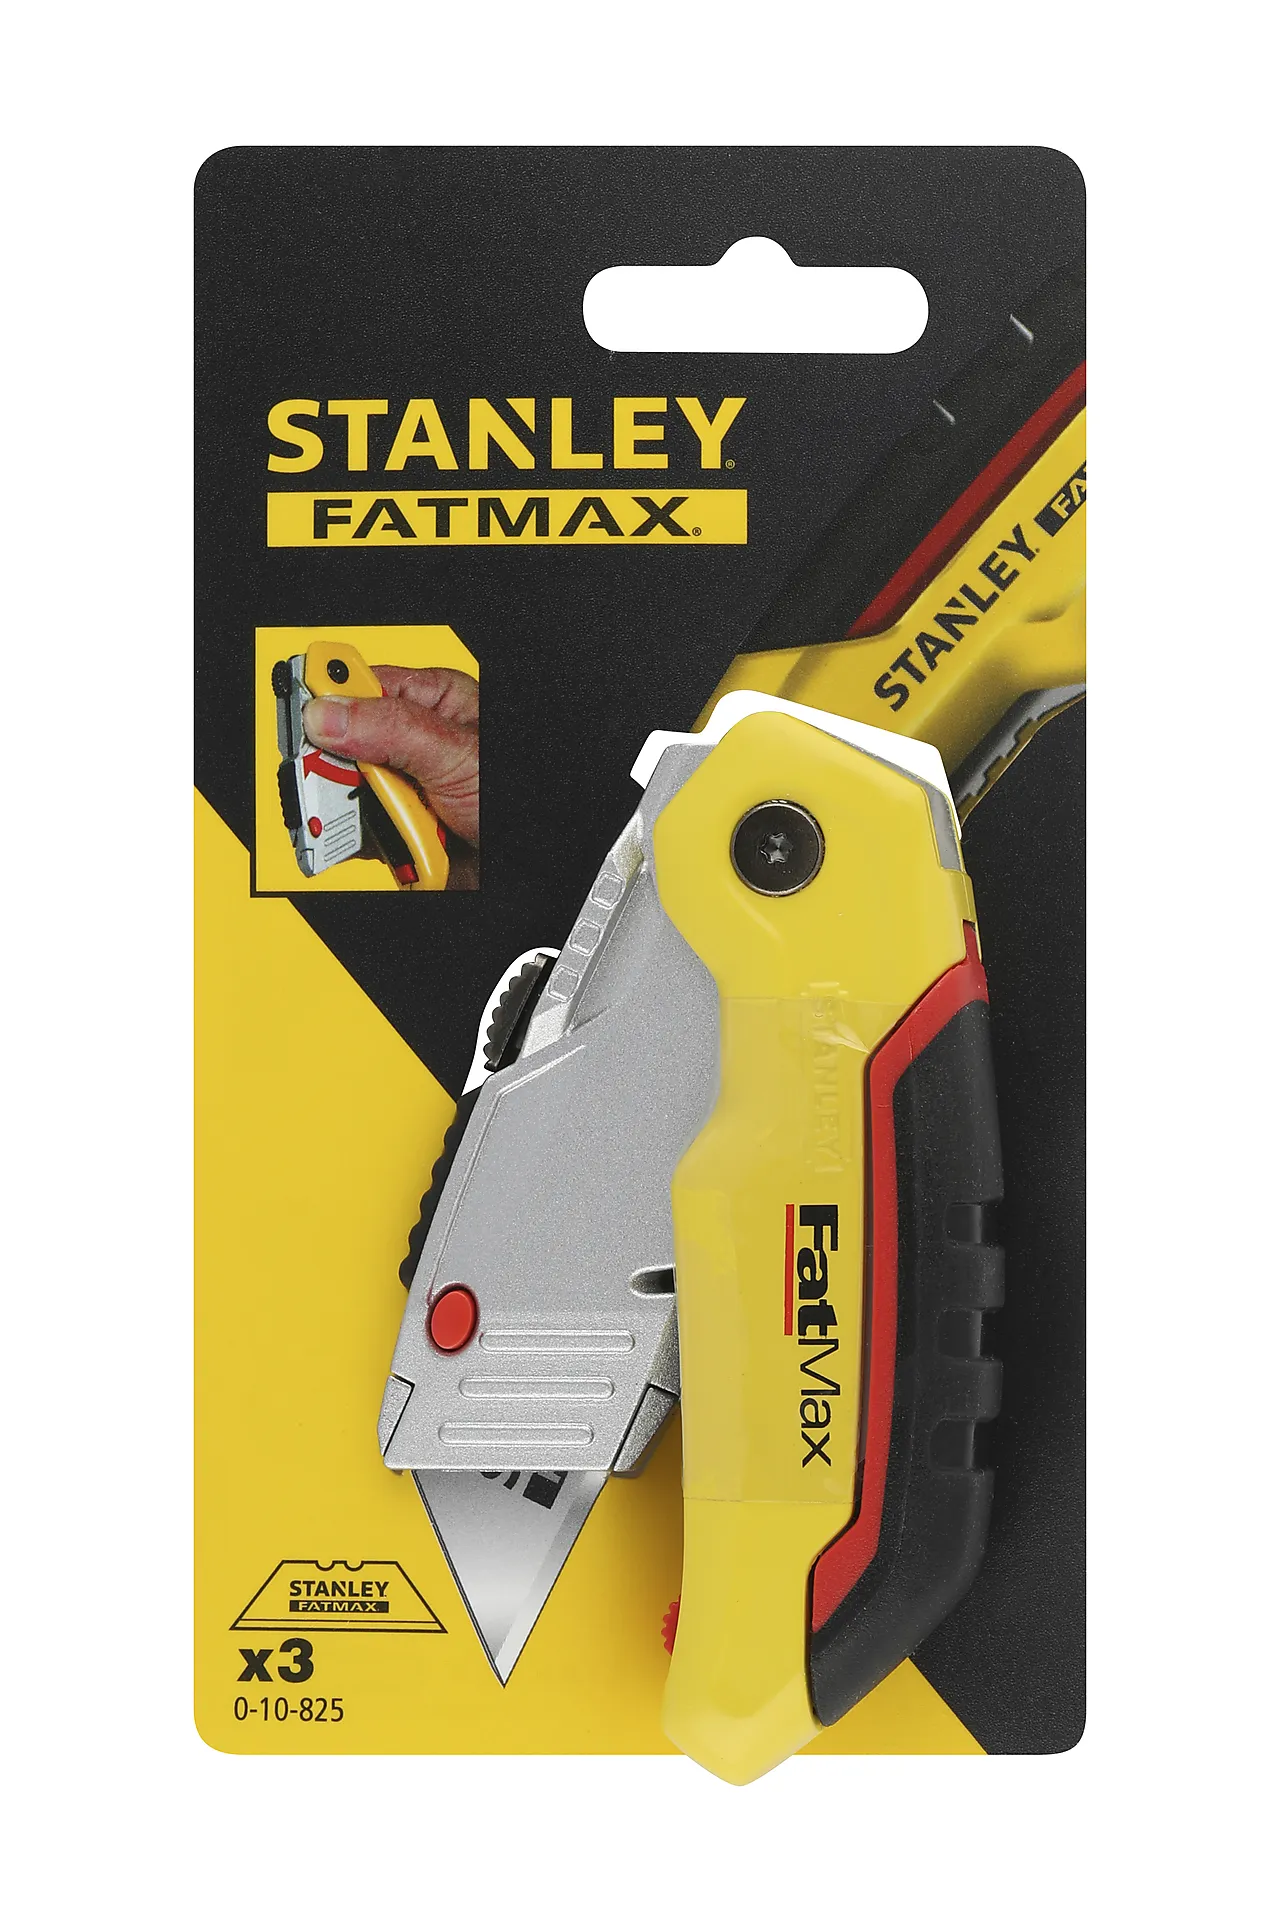 Kniv fatmax skyvbart blad 0-10-825 kniv fatmax sammenleggbar null - null - 3 - Miniatyr